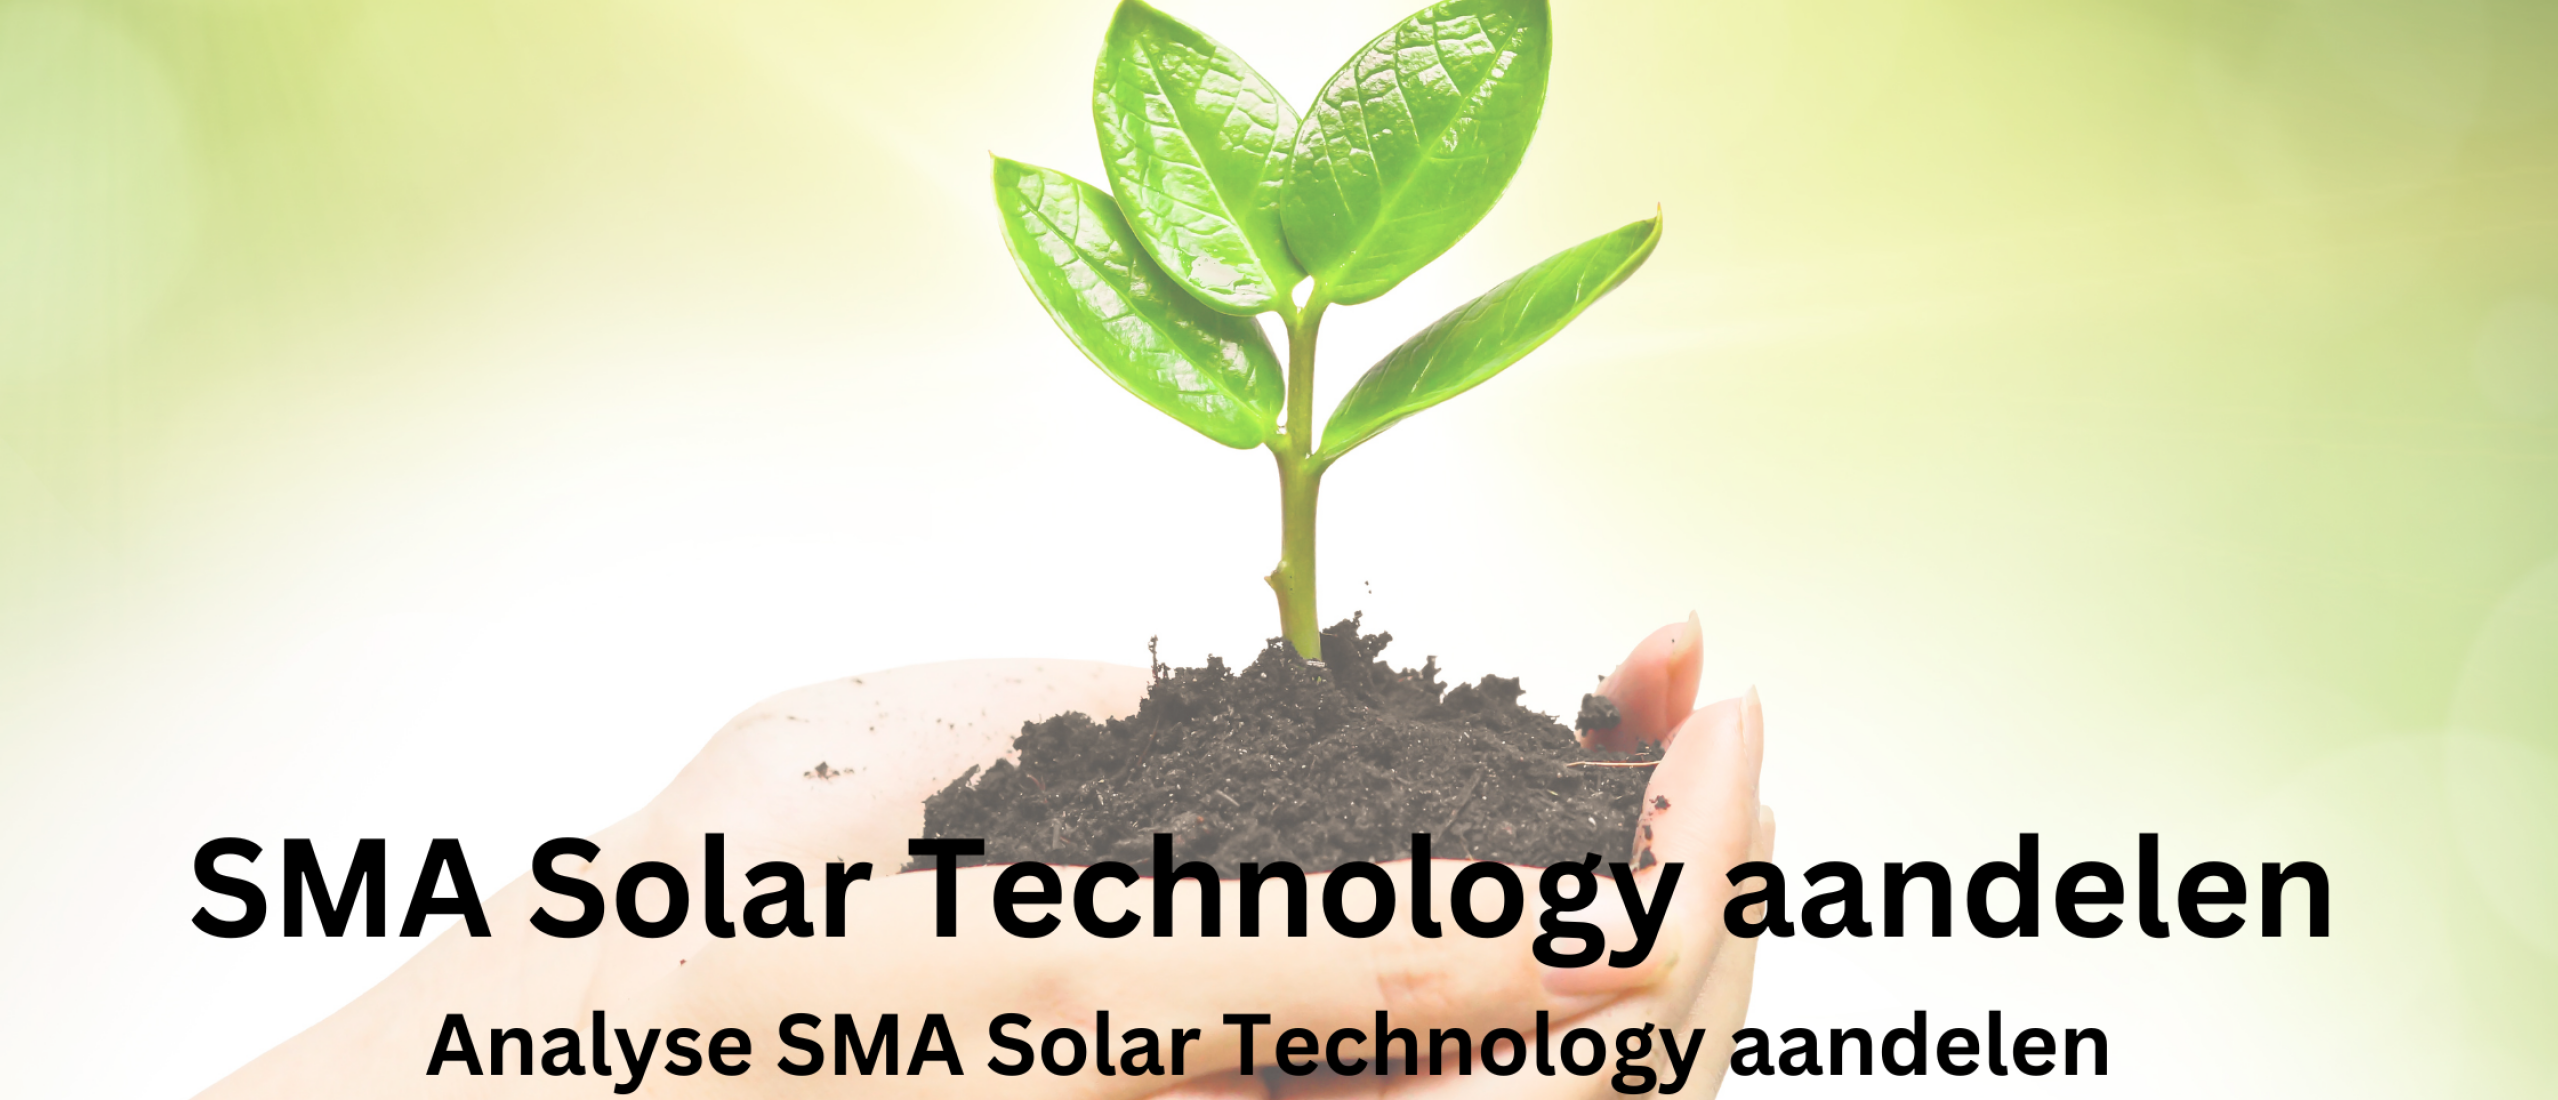 SMA Solar Technology aandelen kopen? Analyse +48,4% Groei | Happy Investors